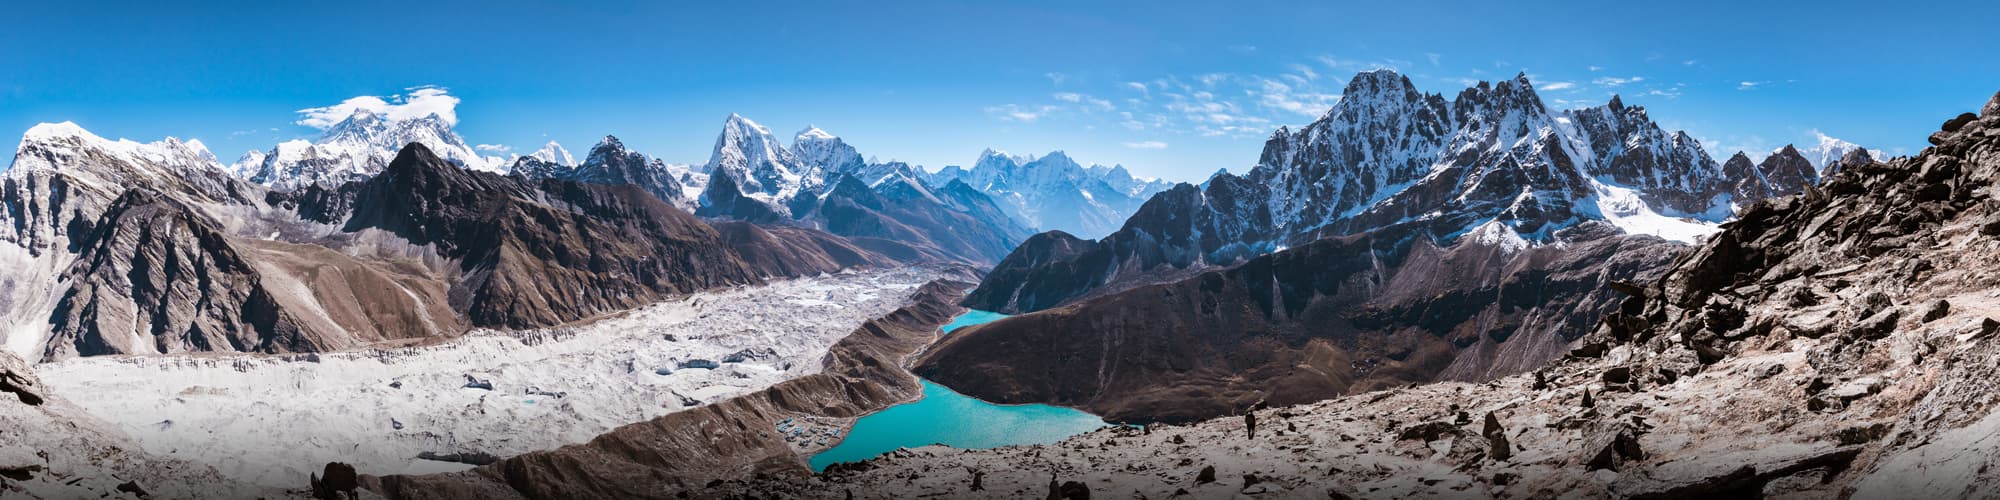 Trekking au Népal : randonnée, trek et voyage © Rmnunes / iStock